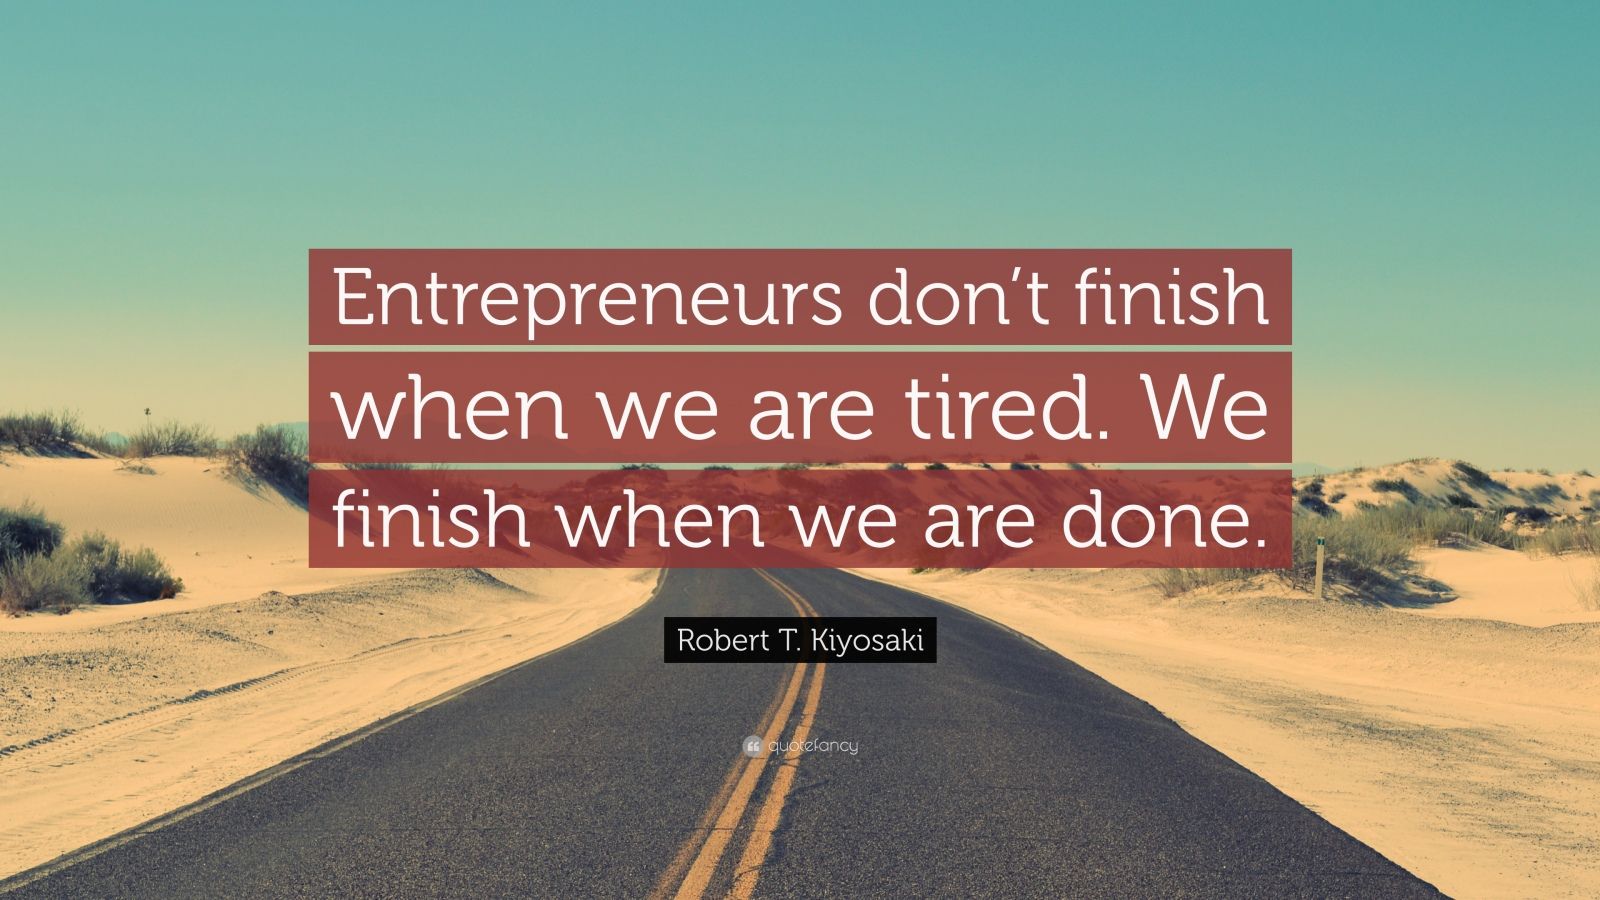 Robert T. Kiyosaki Quote: “Entrepreneurs don’t finish when we are tired ...